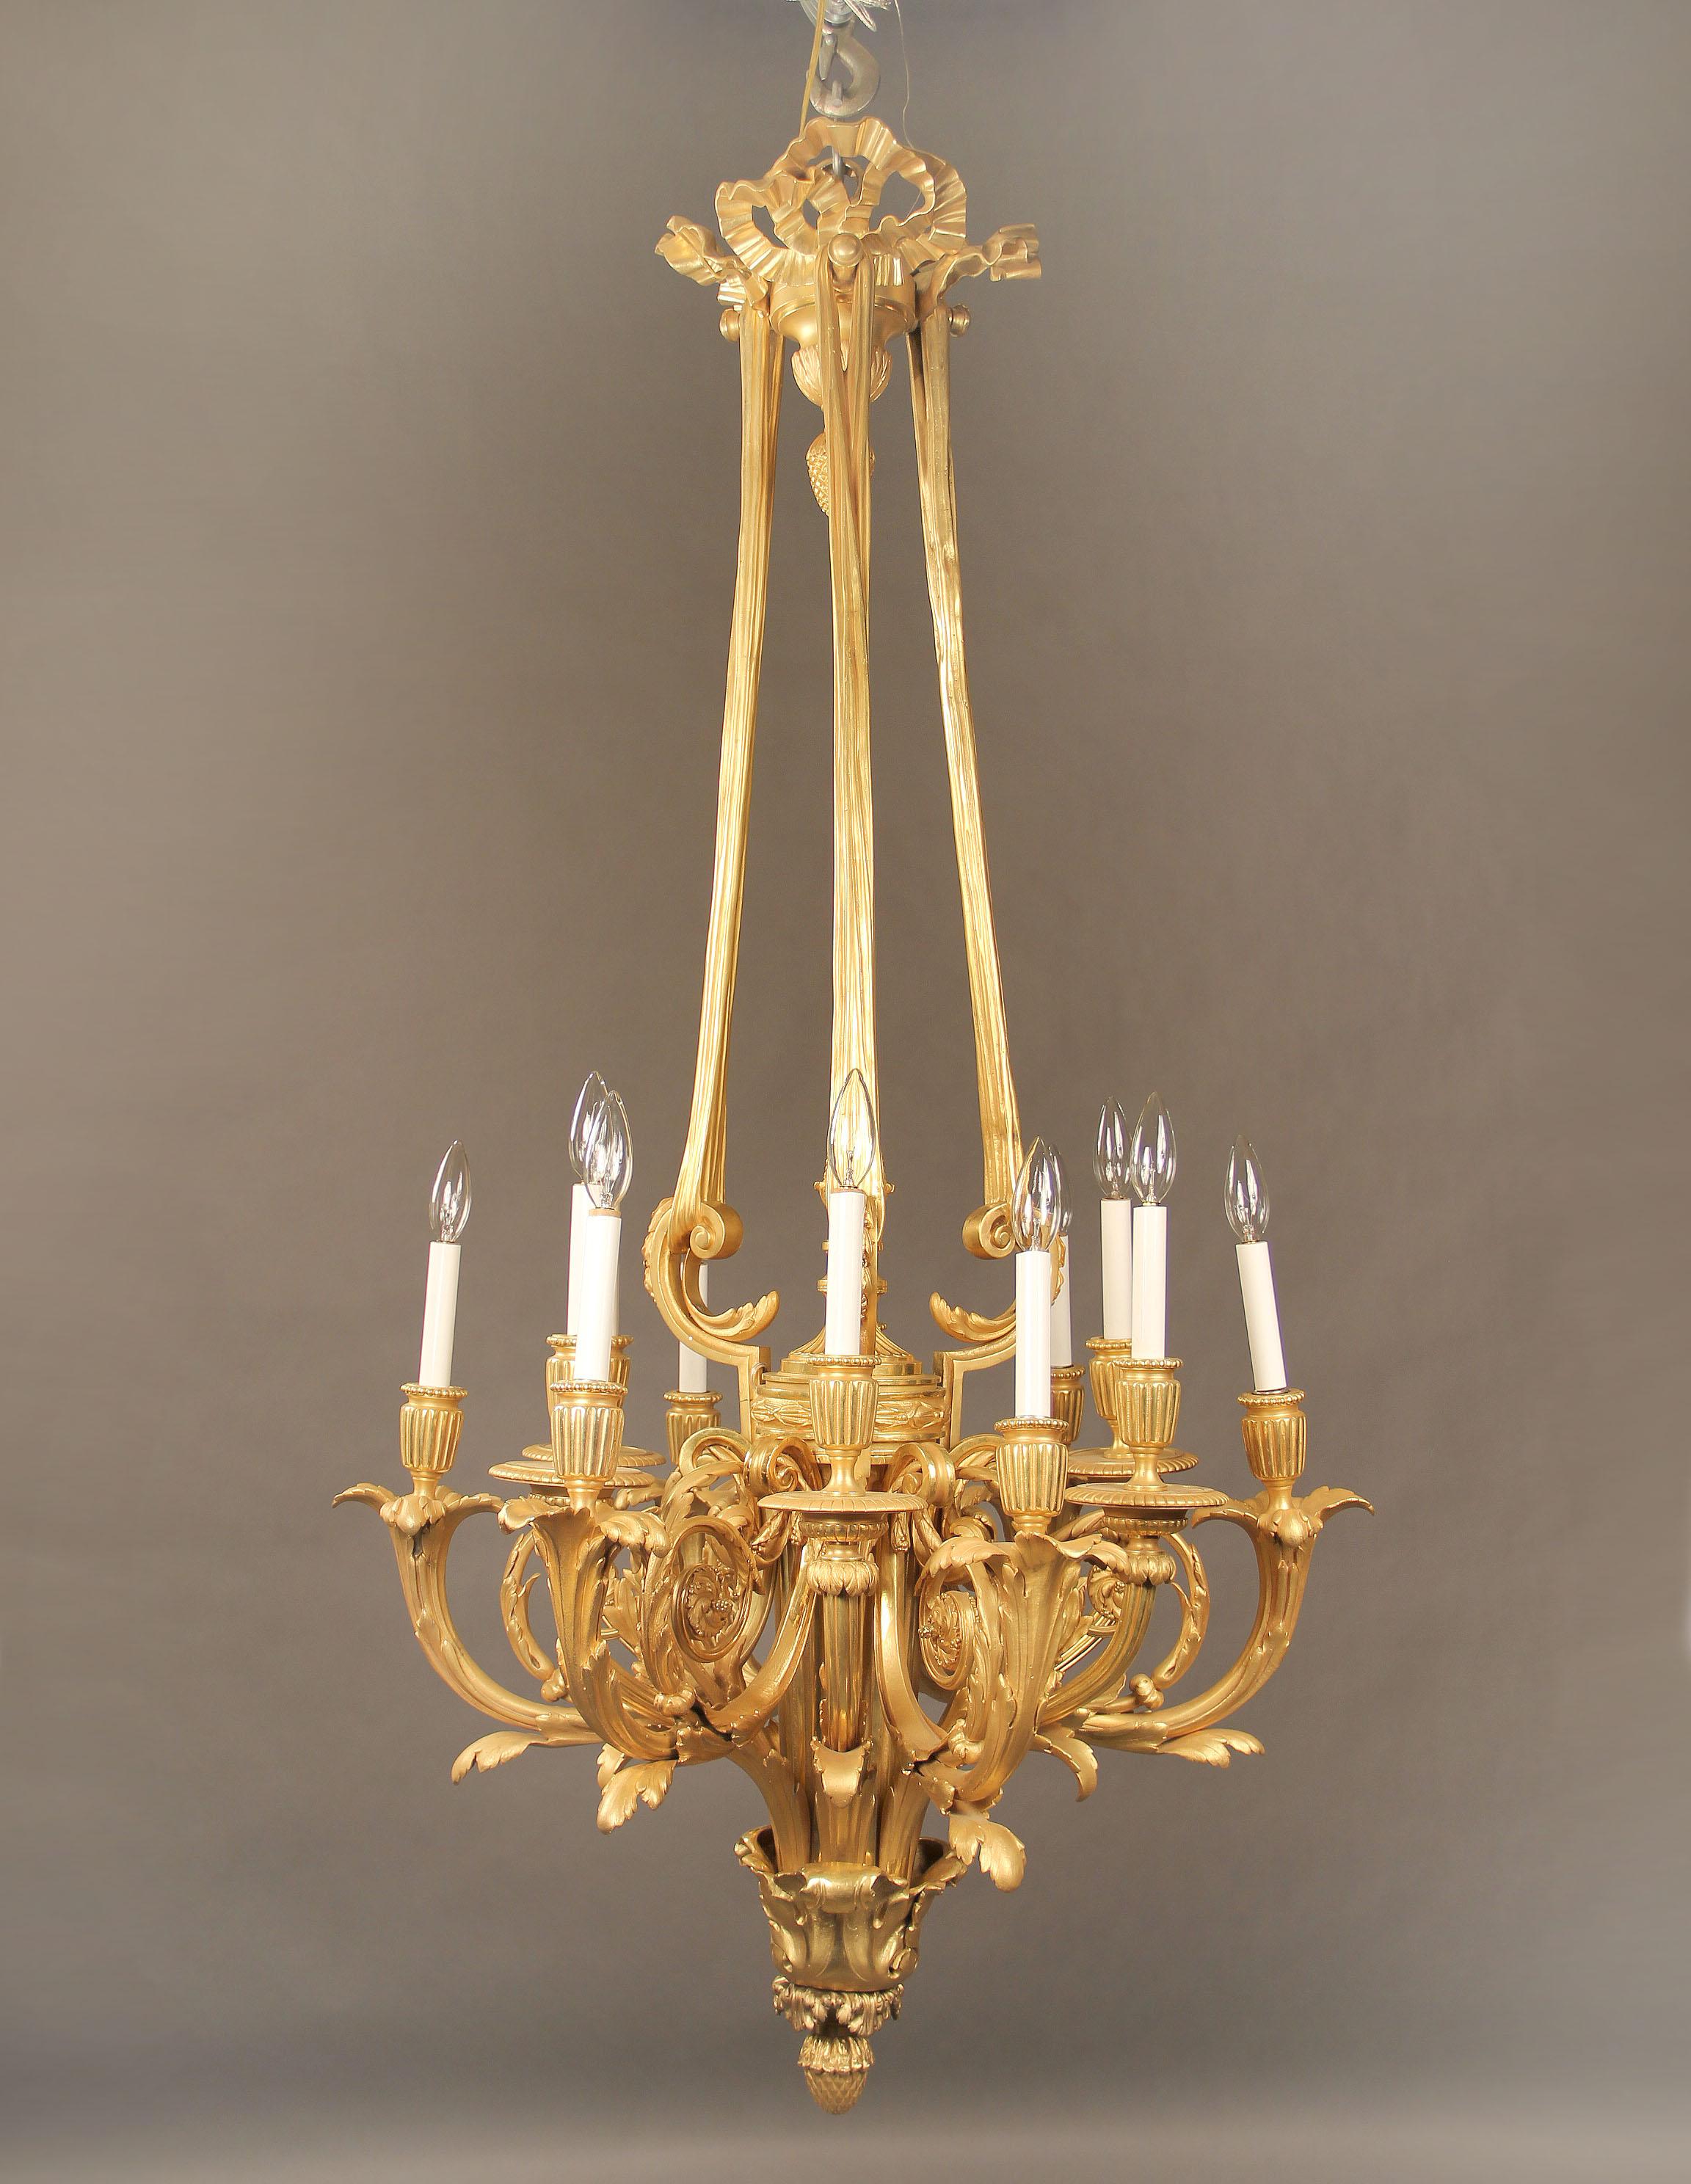 A nice late 19th century gilt bronze twelve-light chandelier.

A long narrow body with 